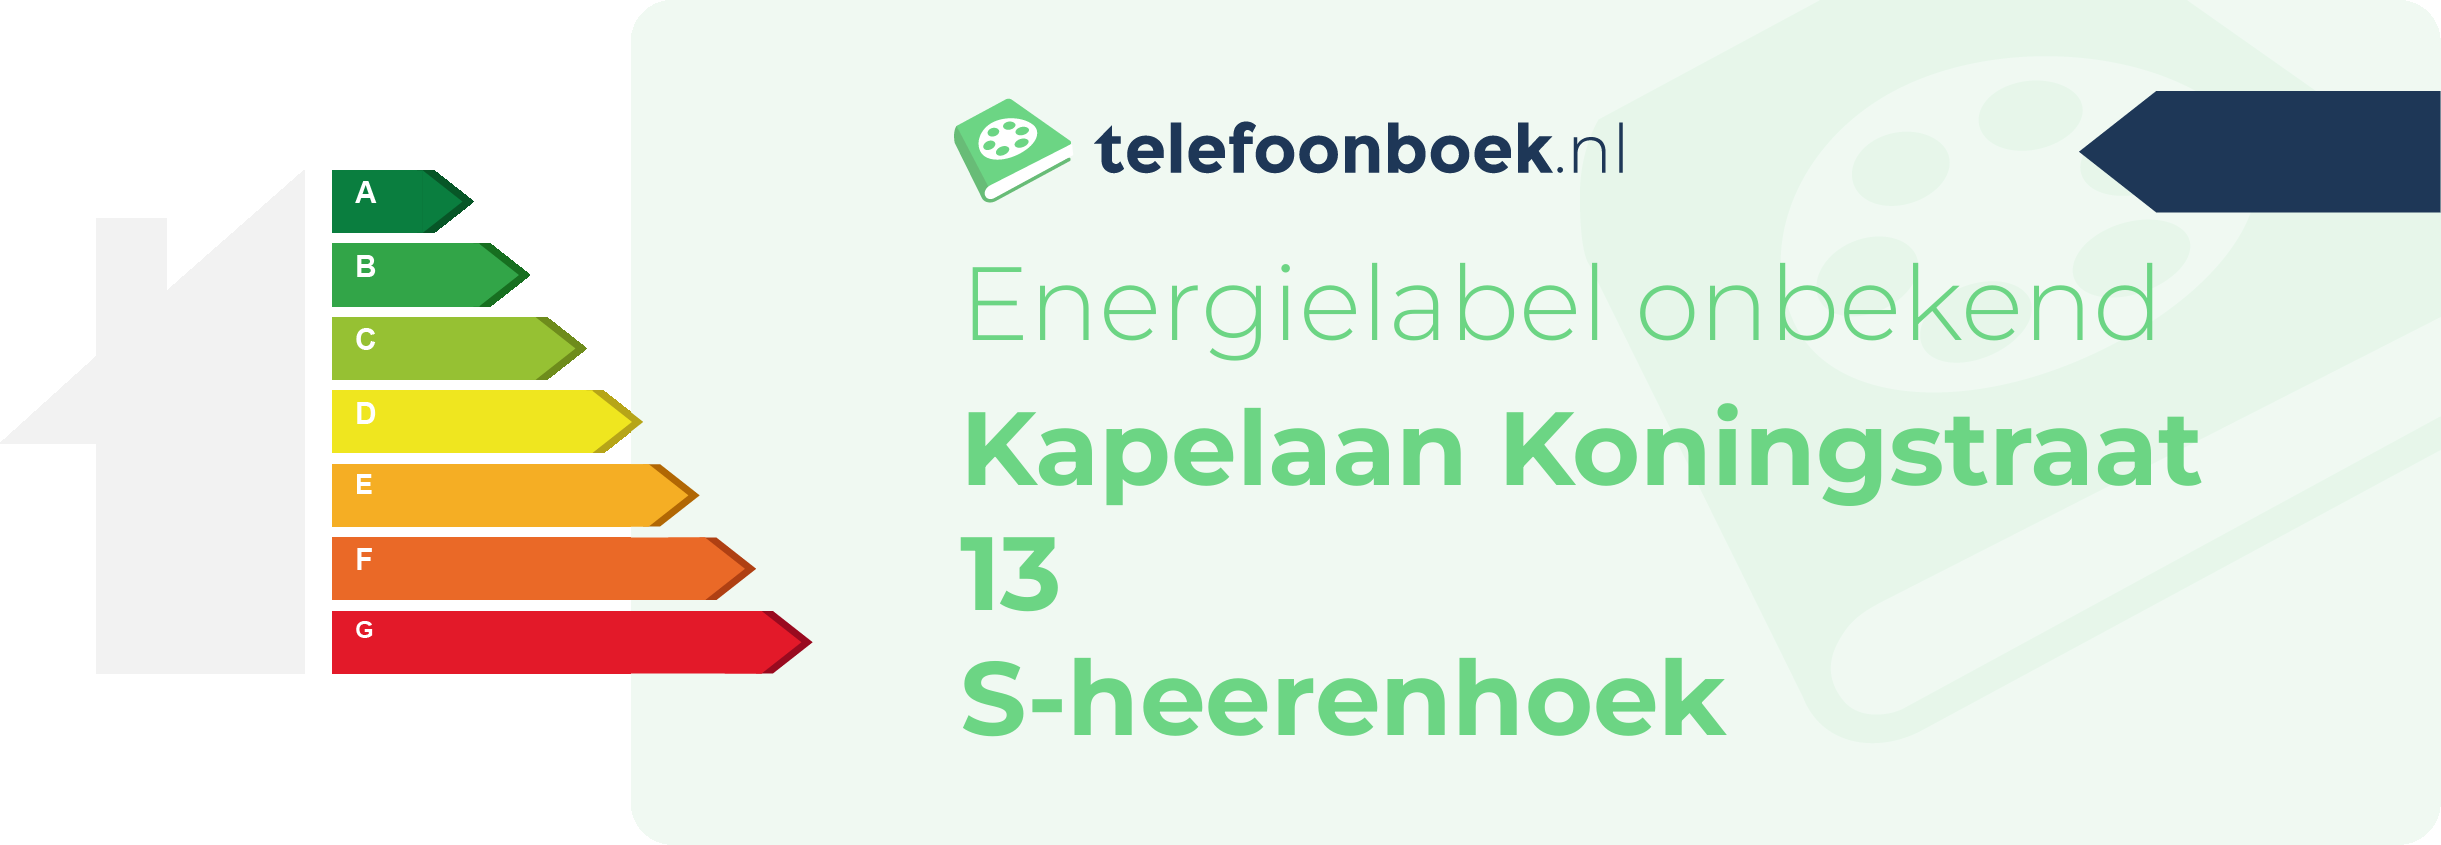 Energielabel Kapelaan Koningstraat 13 S-Heerenhoek